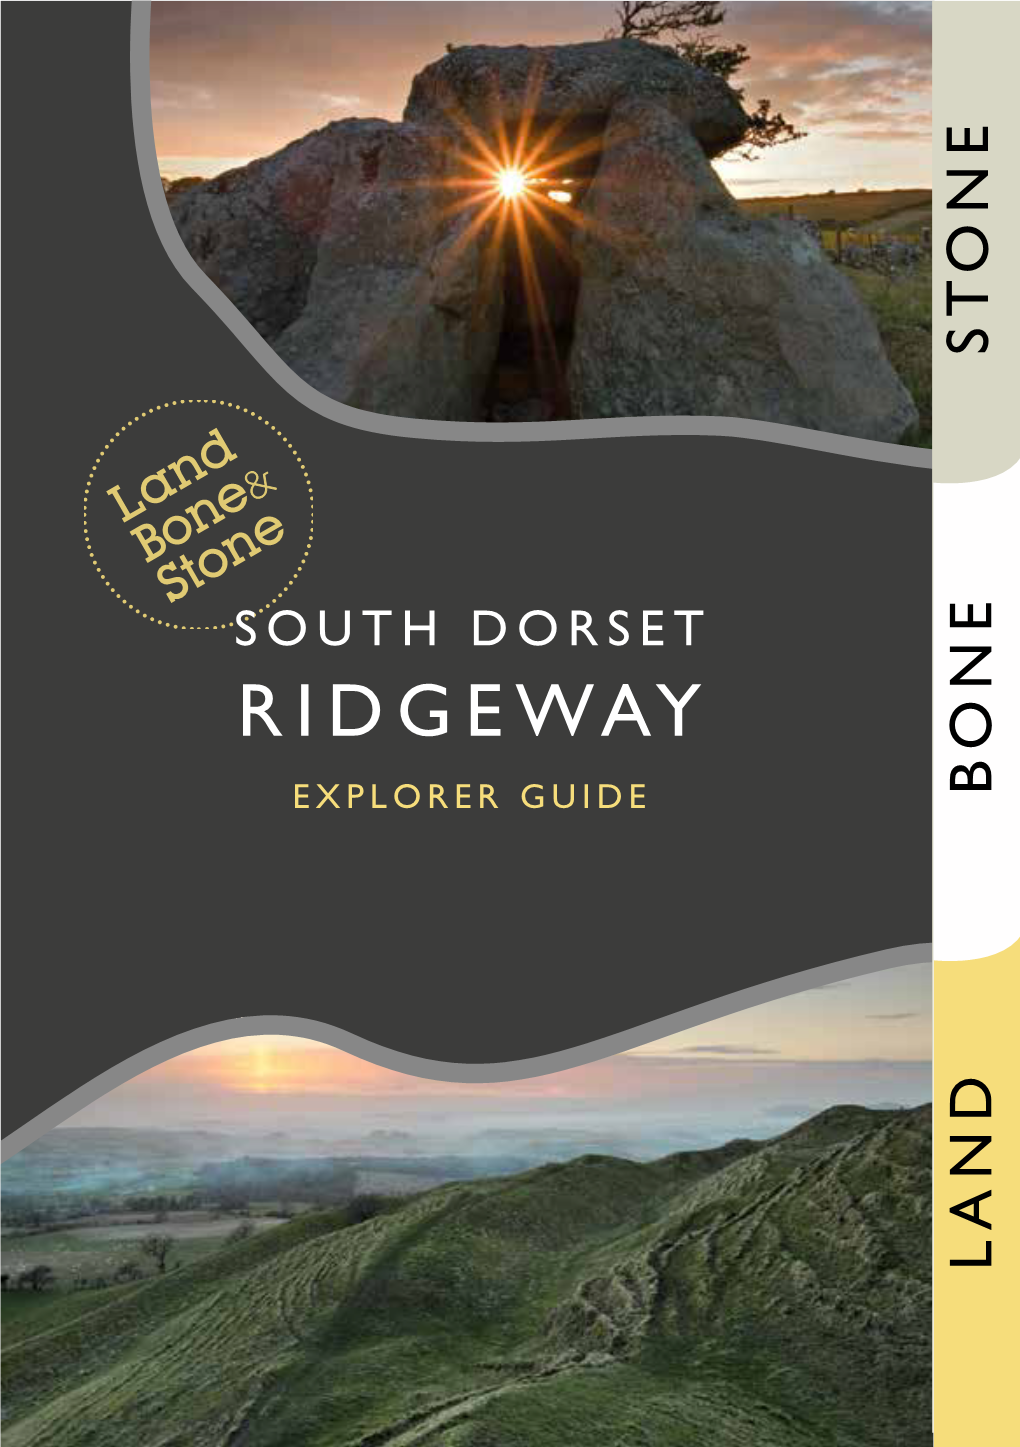 South Dorset Ridgeway Explorer Guide